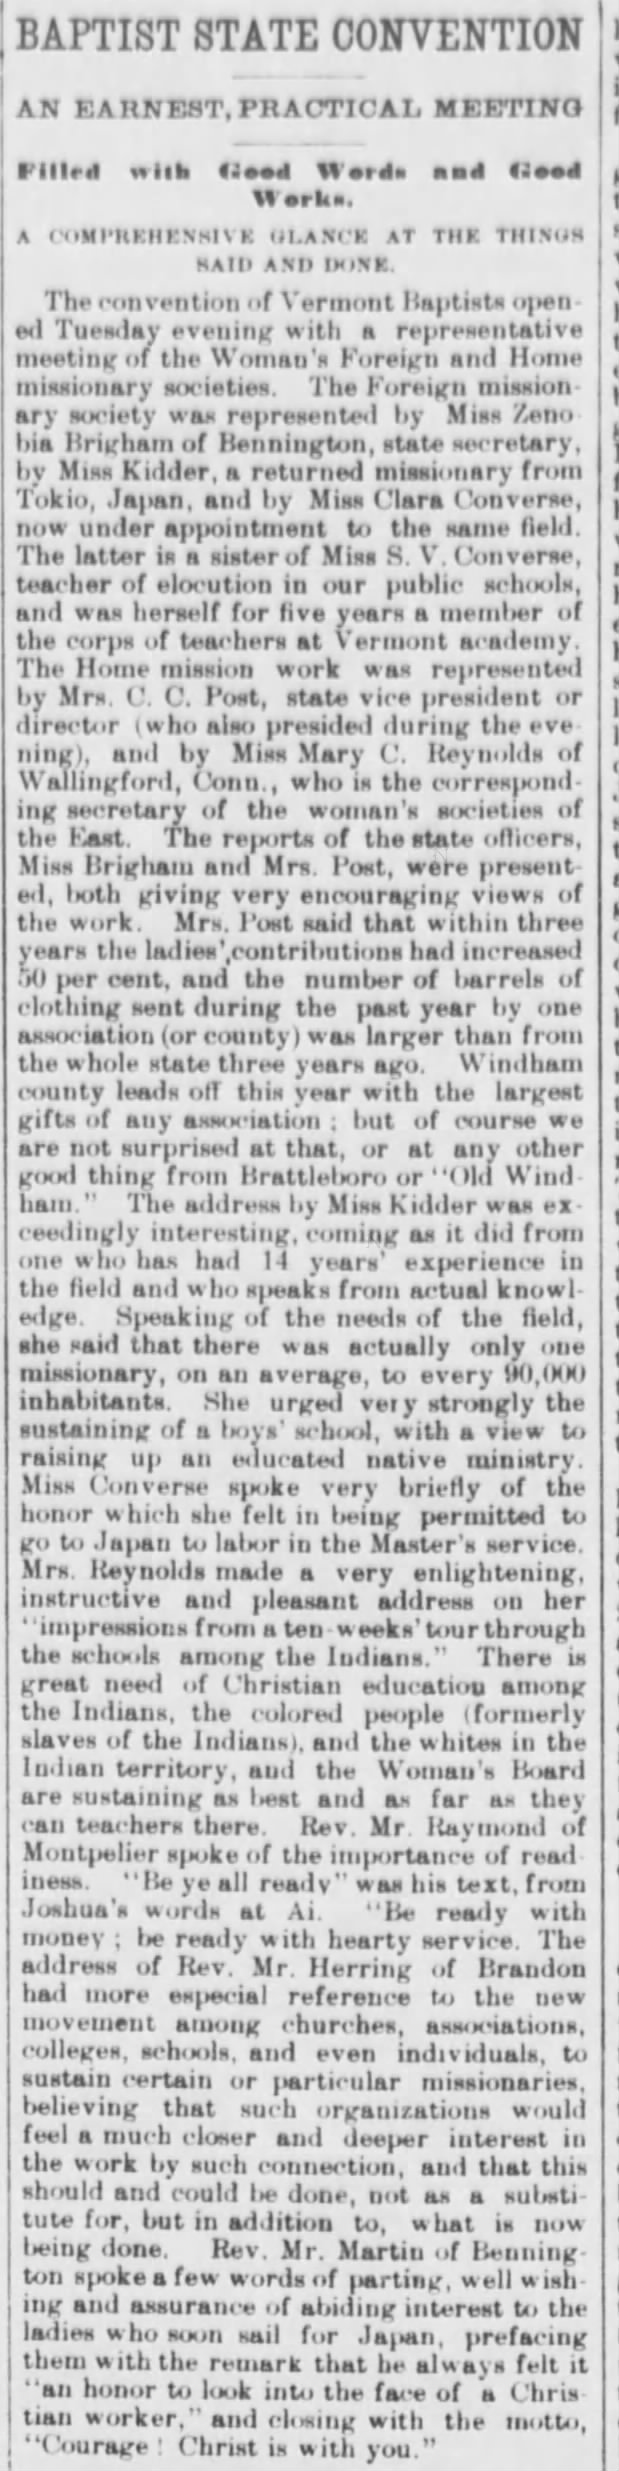 Baptist State Convention, Vermont Phoenix (Brattleboro, Vermont) September 27, 1889, p 2